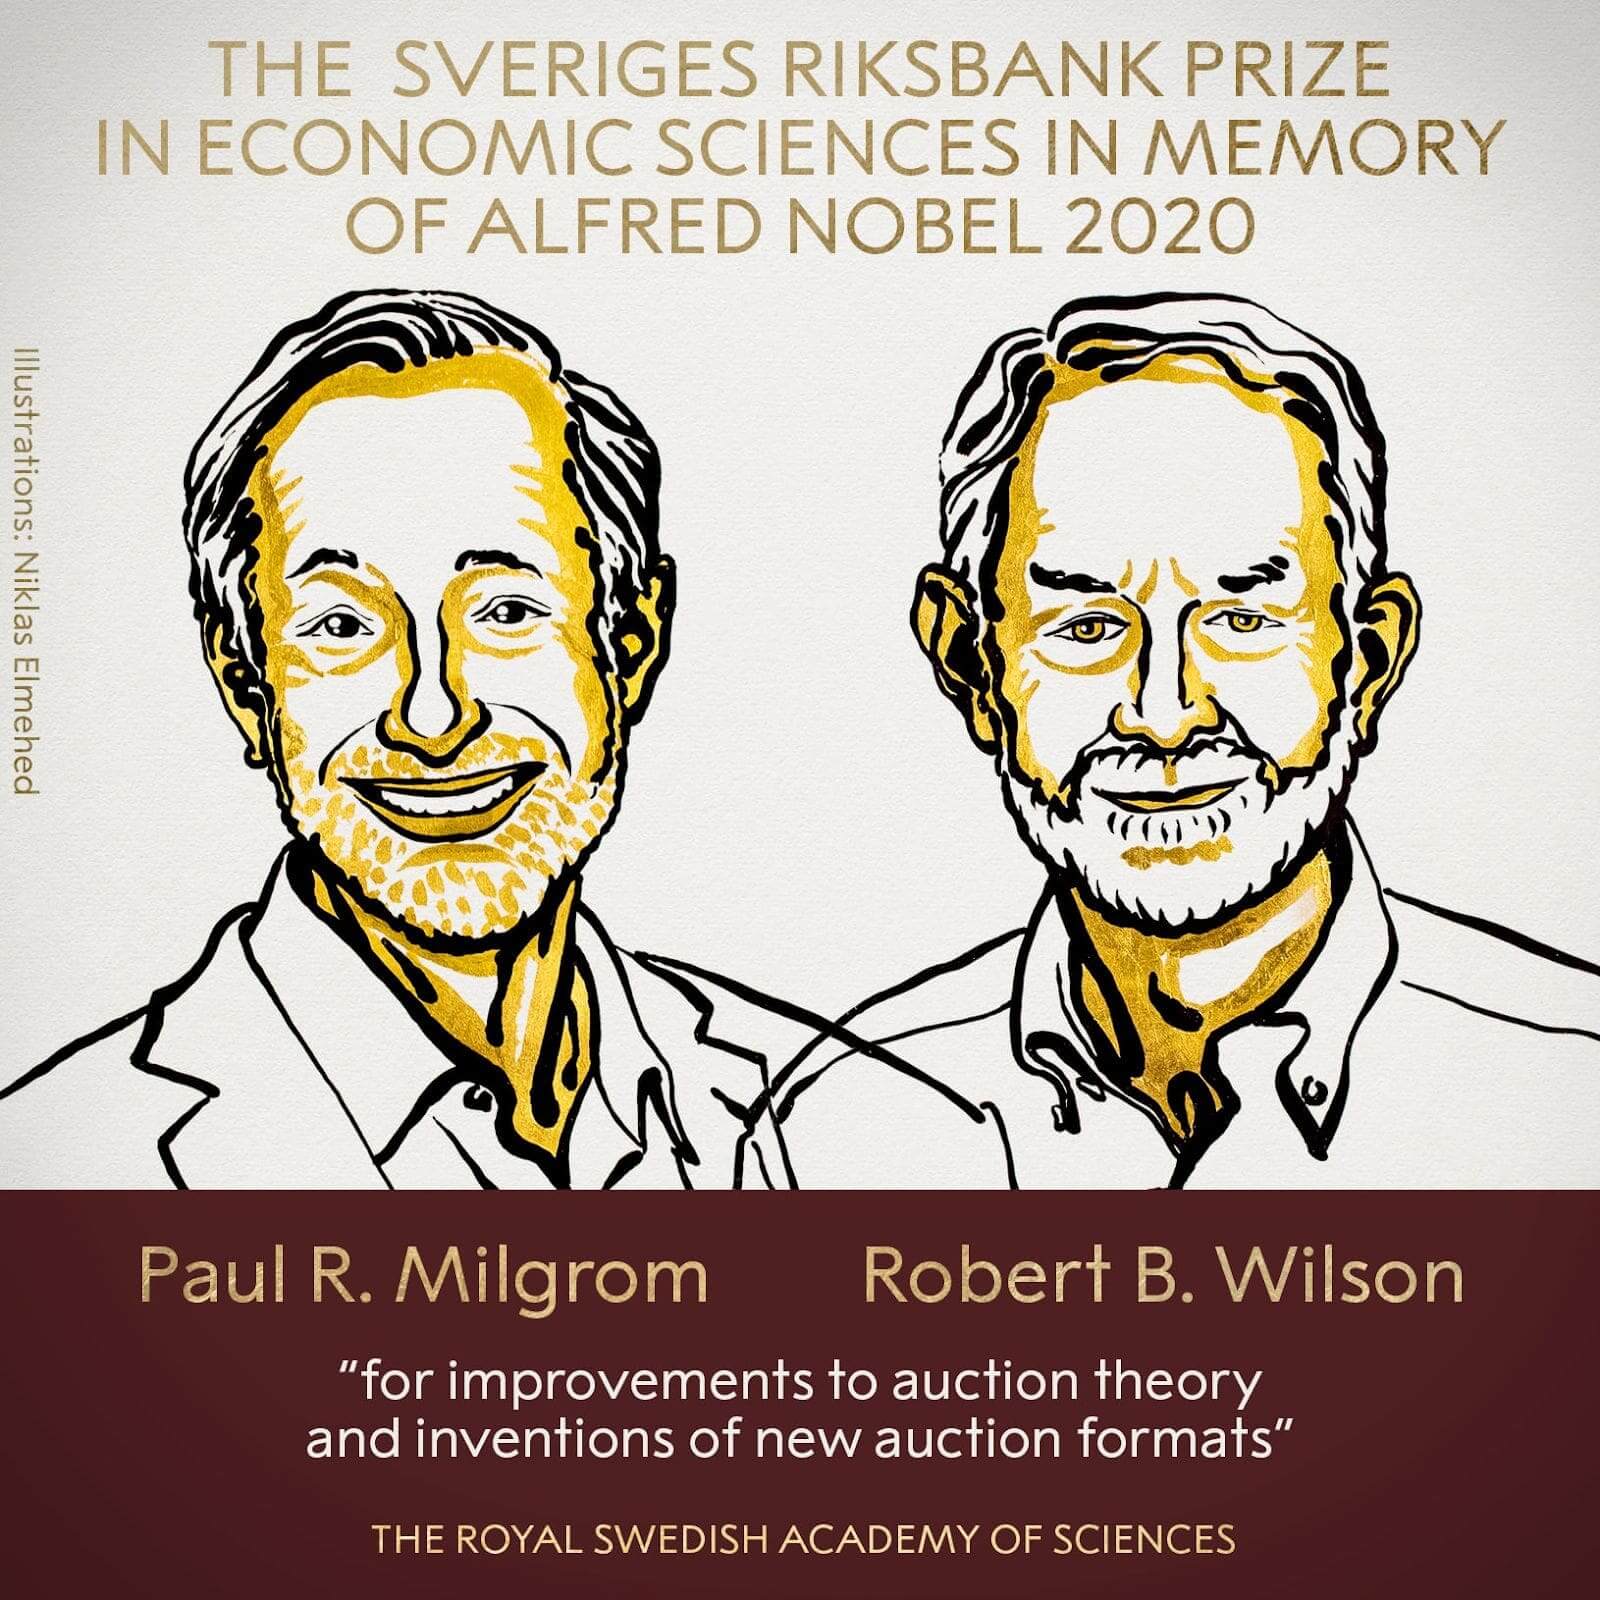 The Sveriges Riksbank Prize in Economic Sciences in memory of Alfred Nobel 2020